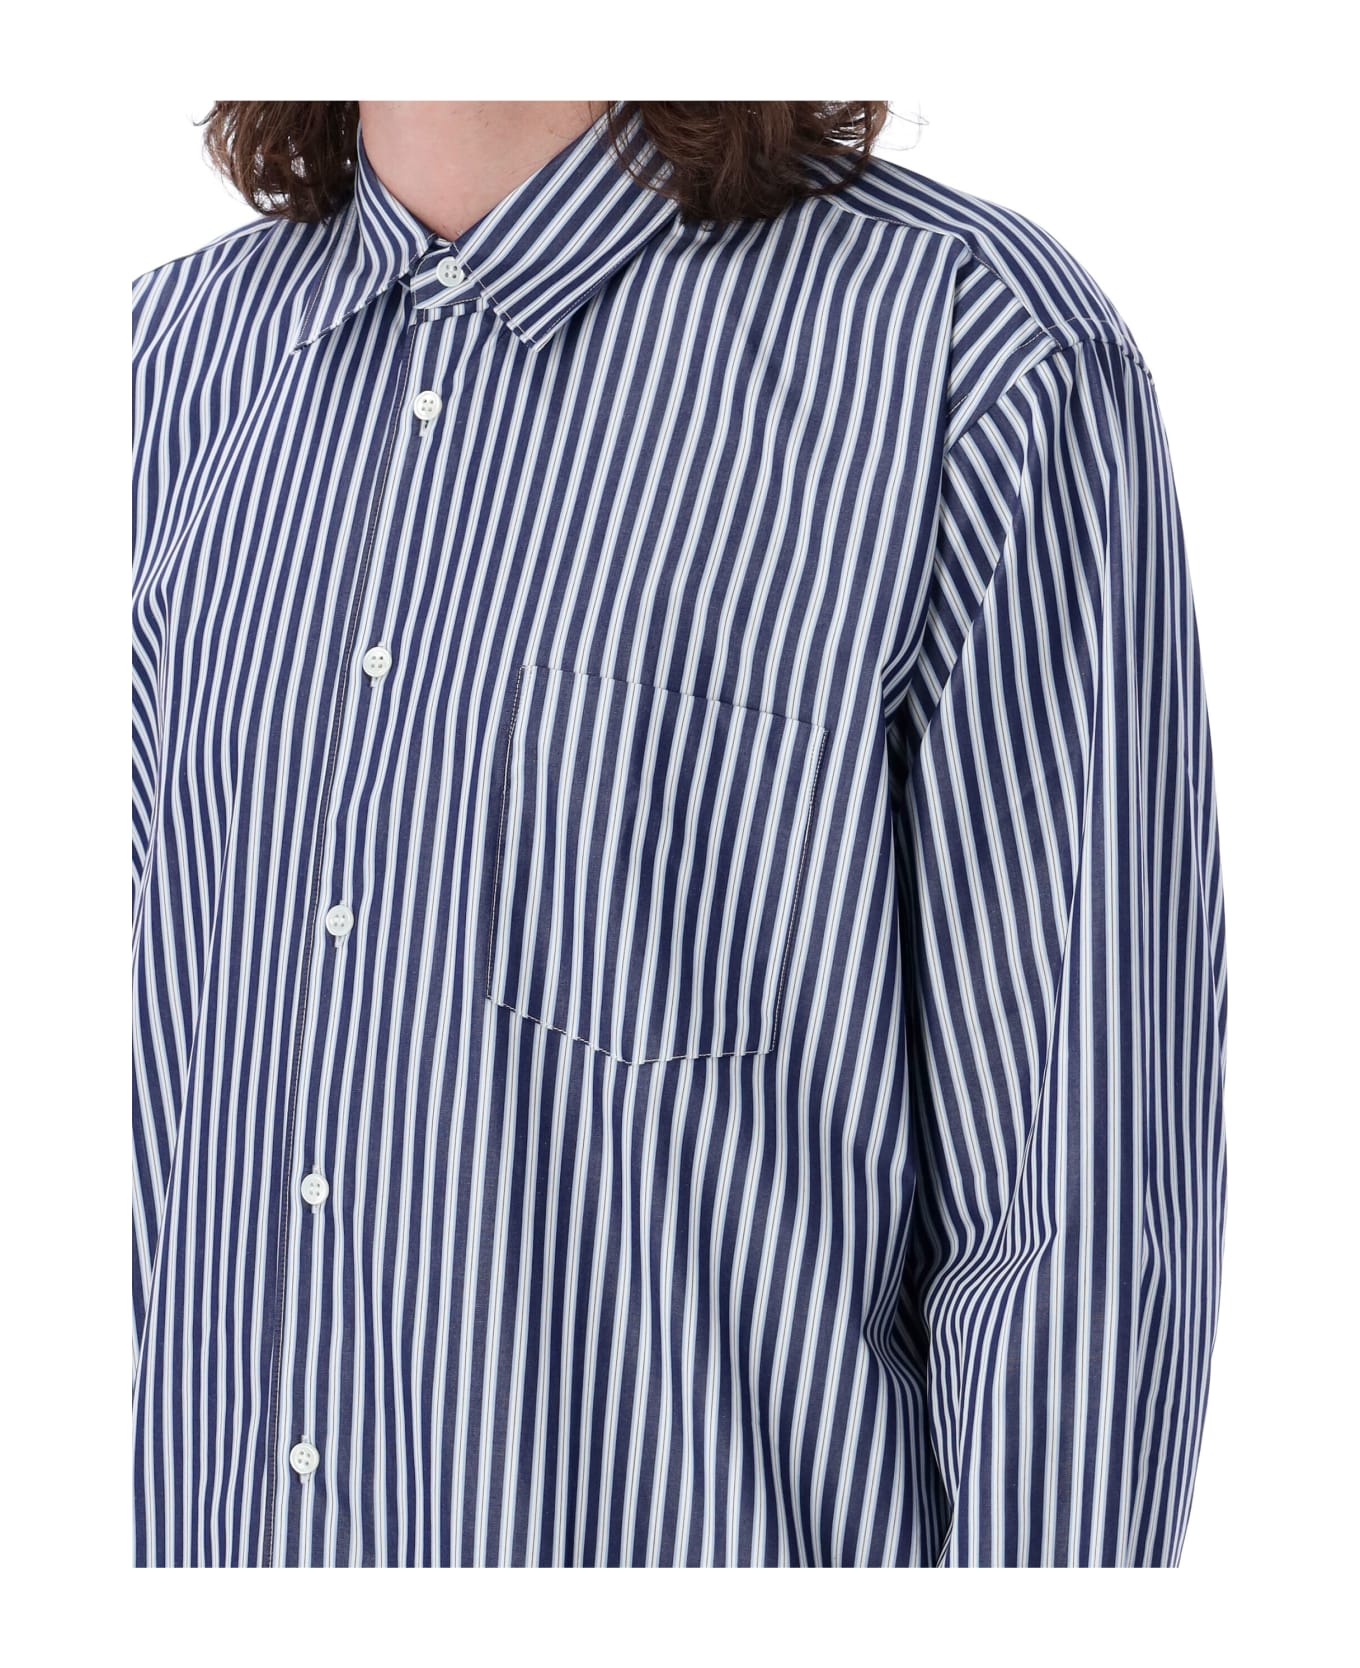 Comme des Garçons Shirt Stripes Shirt - WHITE BLUE シャツ